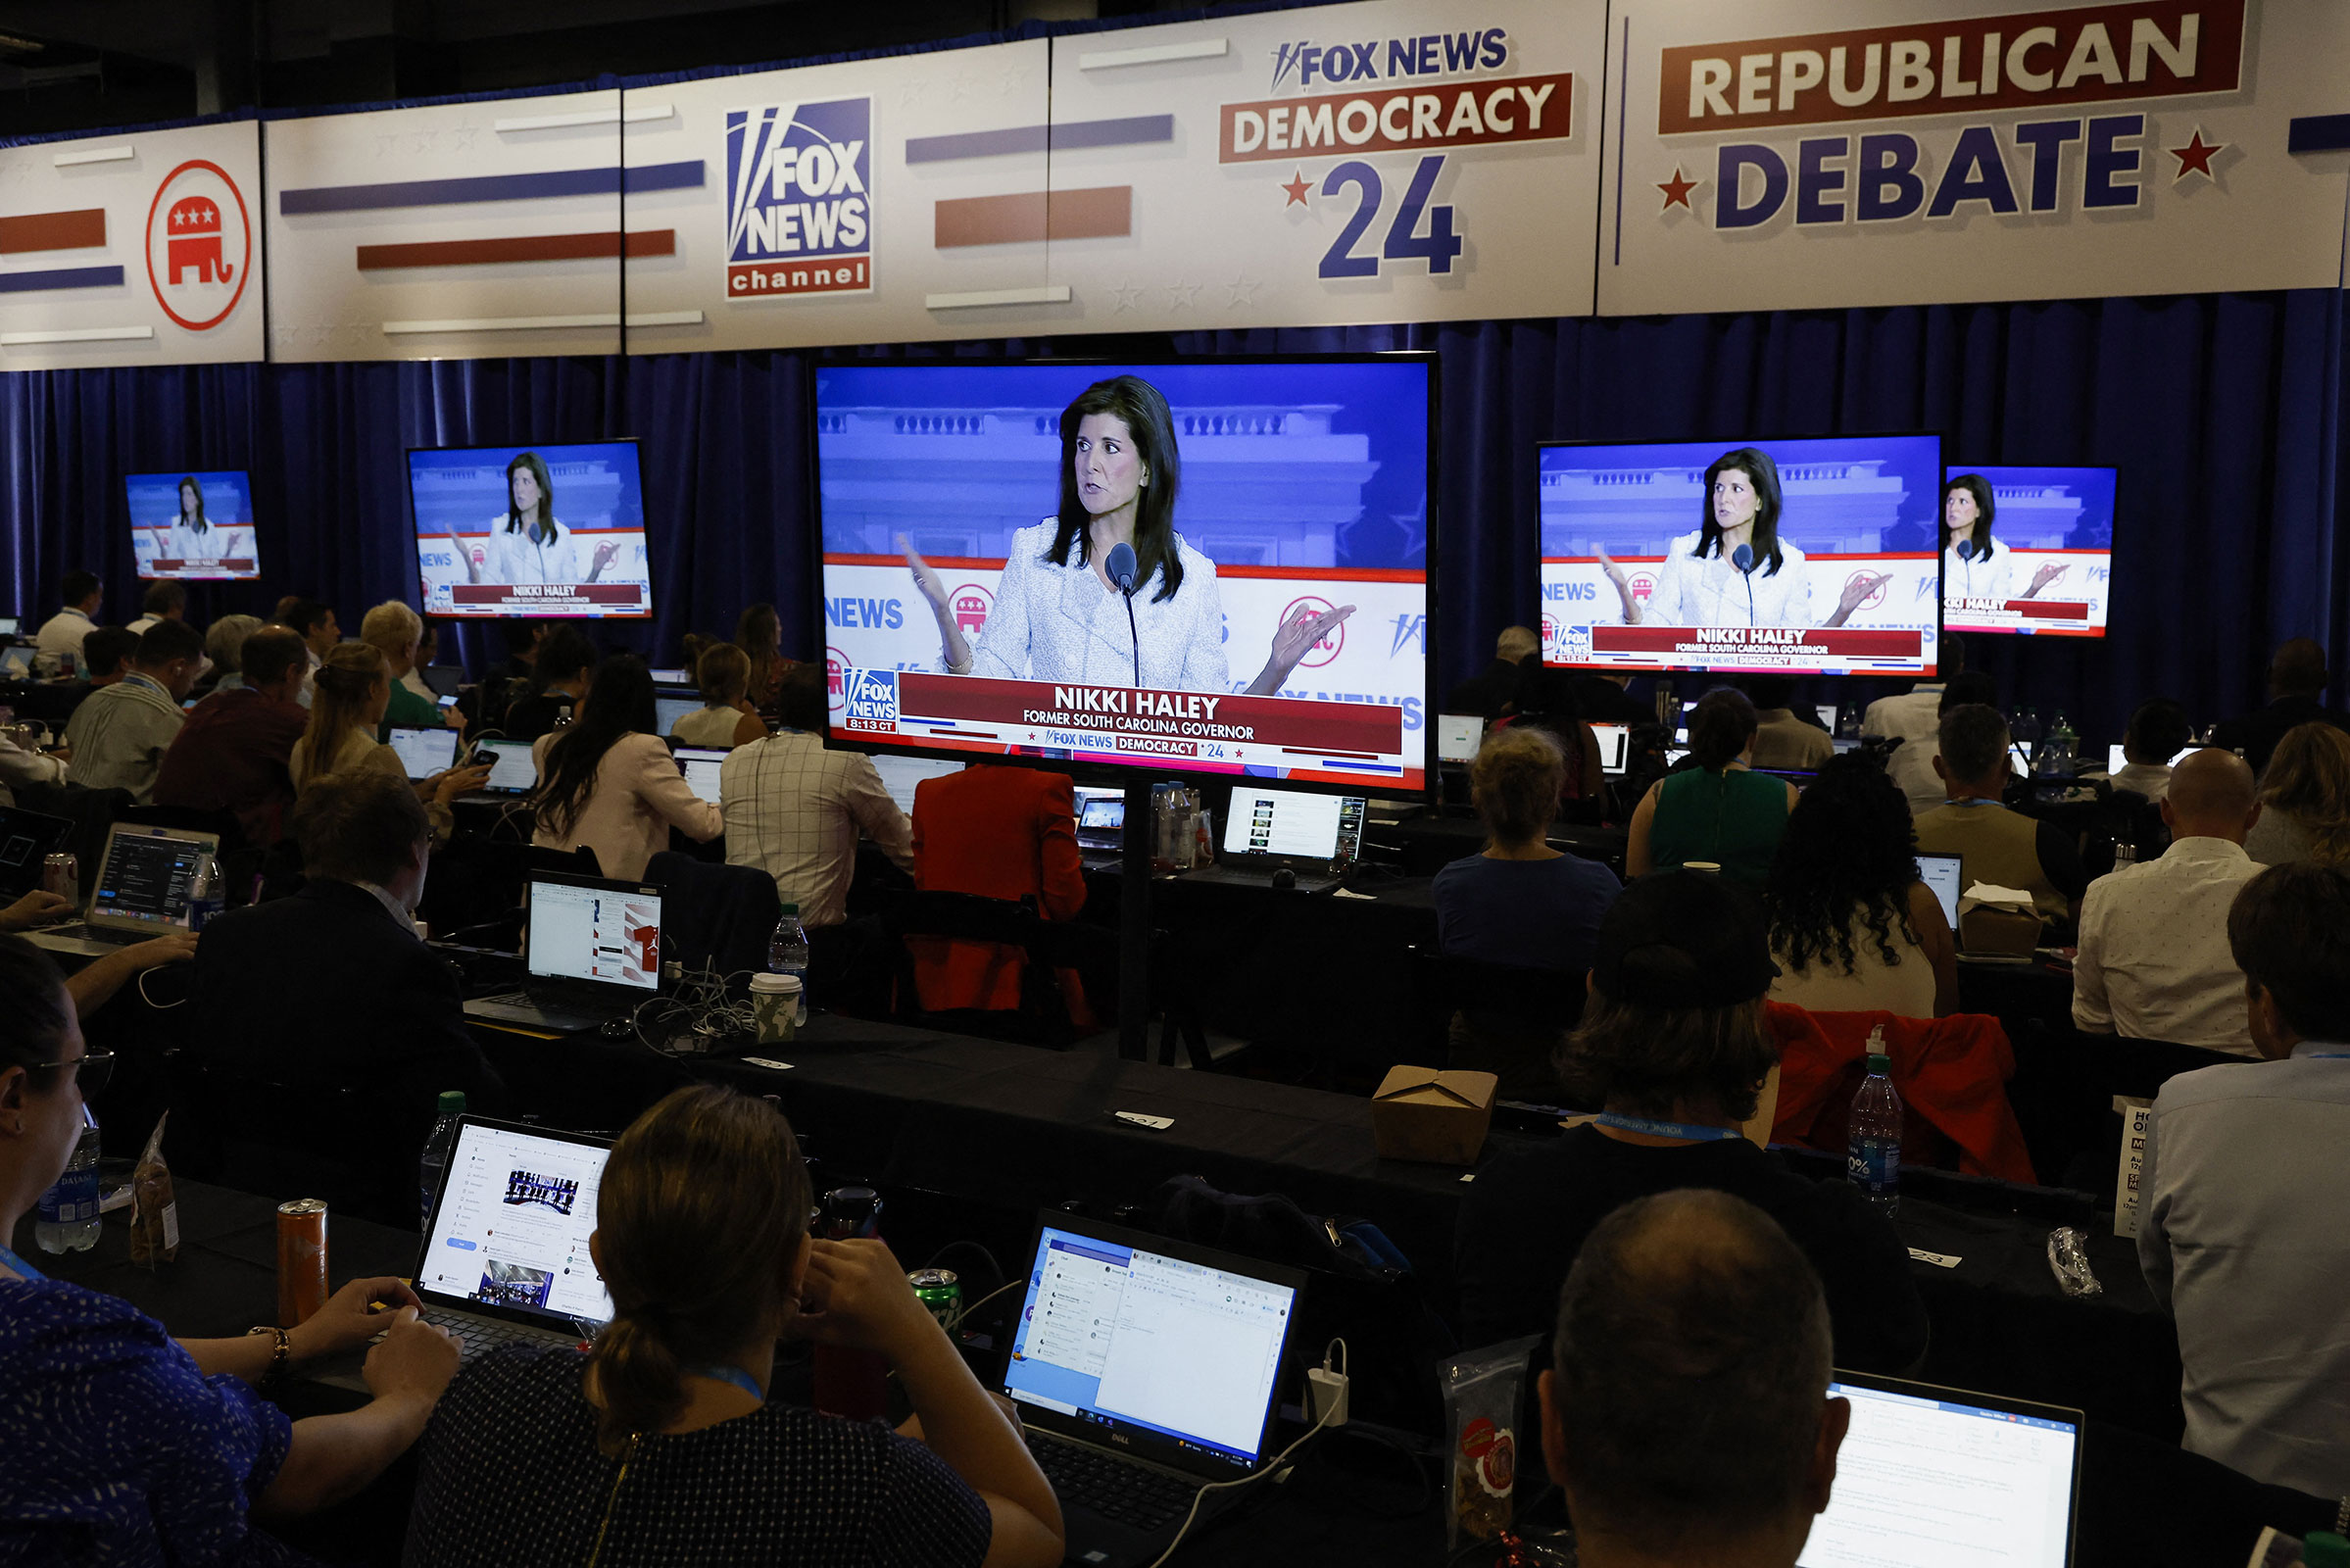 Former South Carolina Gov. Nikki Haley is seen debating on screens in the media filing center on Wednesday.